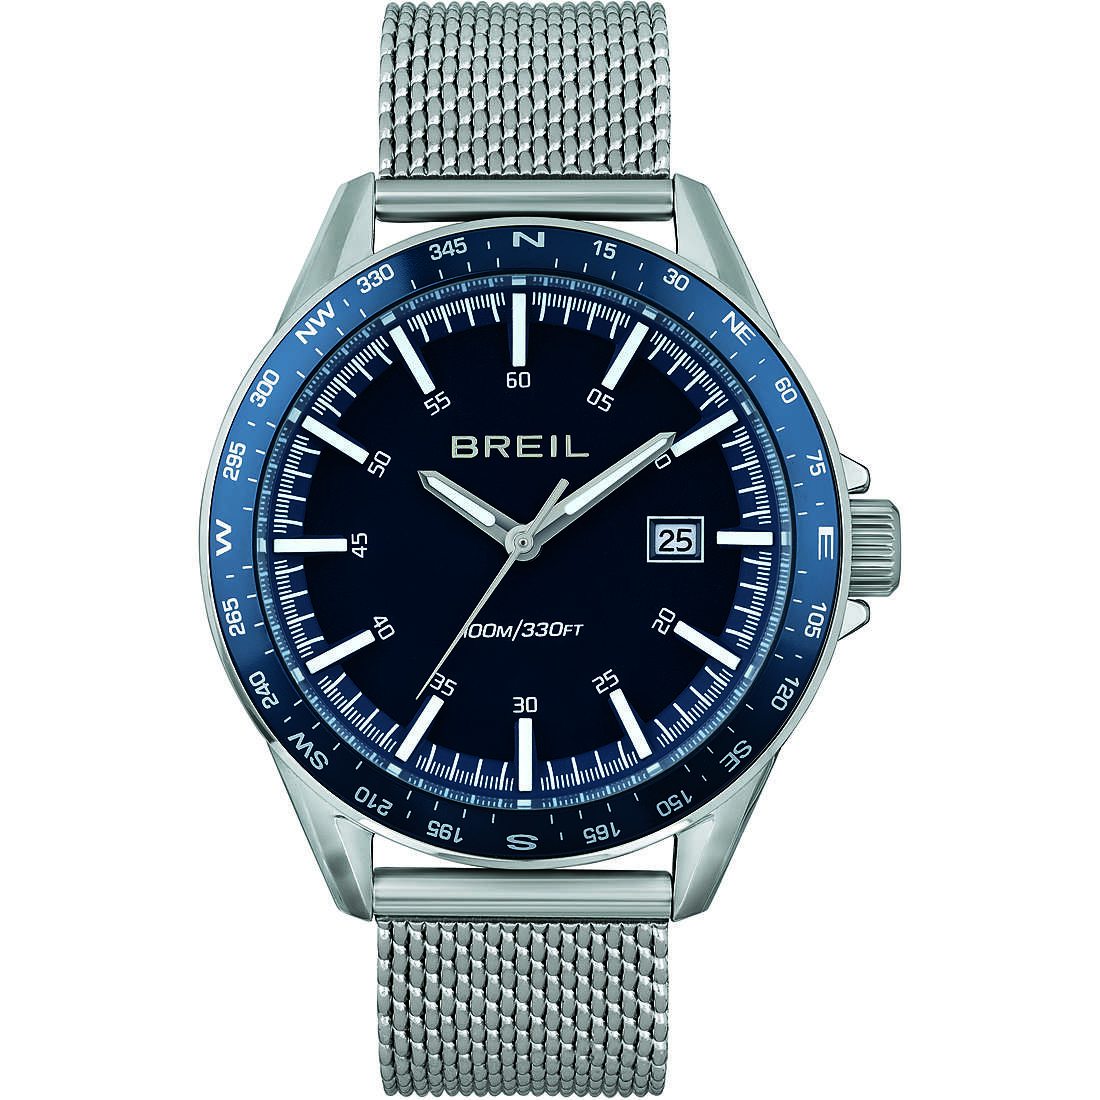 chronograph watch Aluminium Blue dial man TW1893